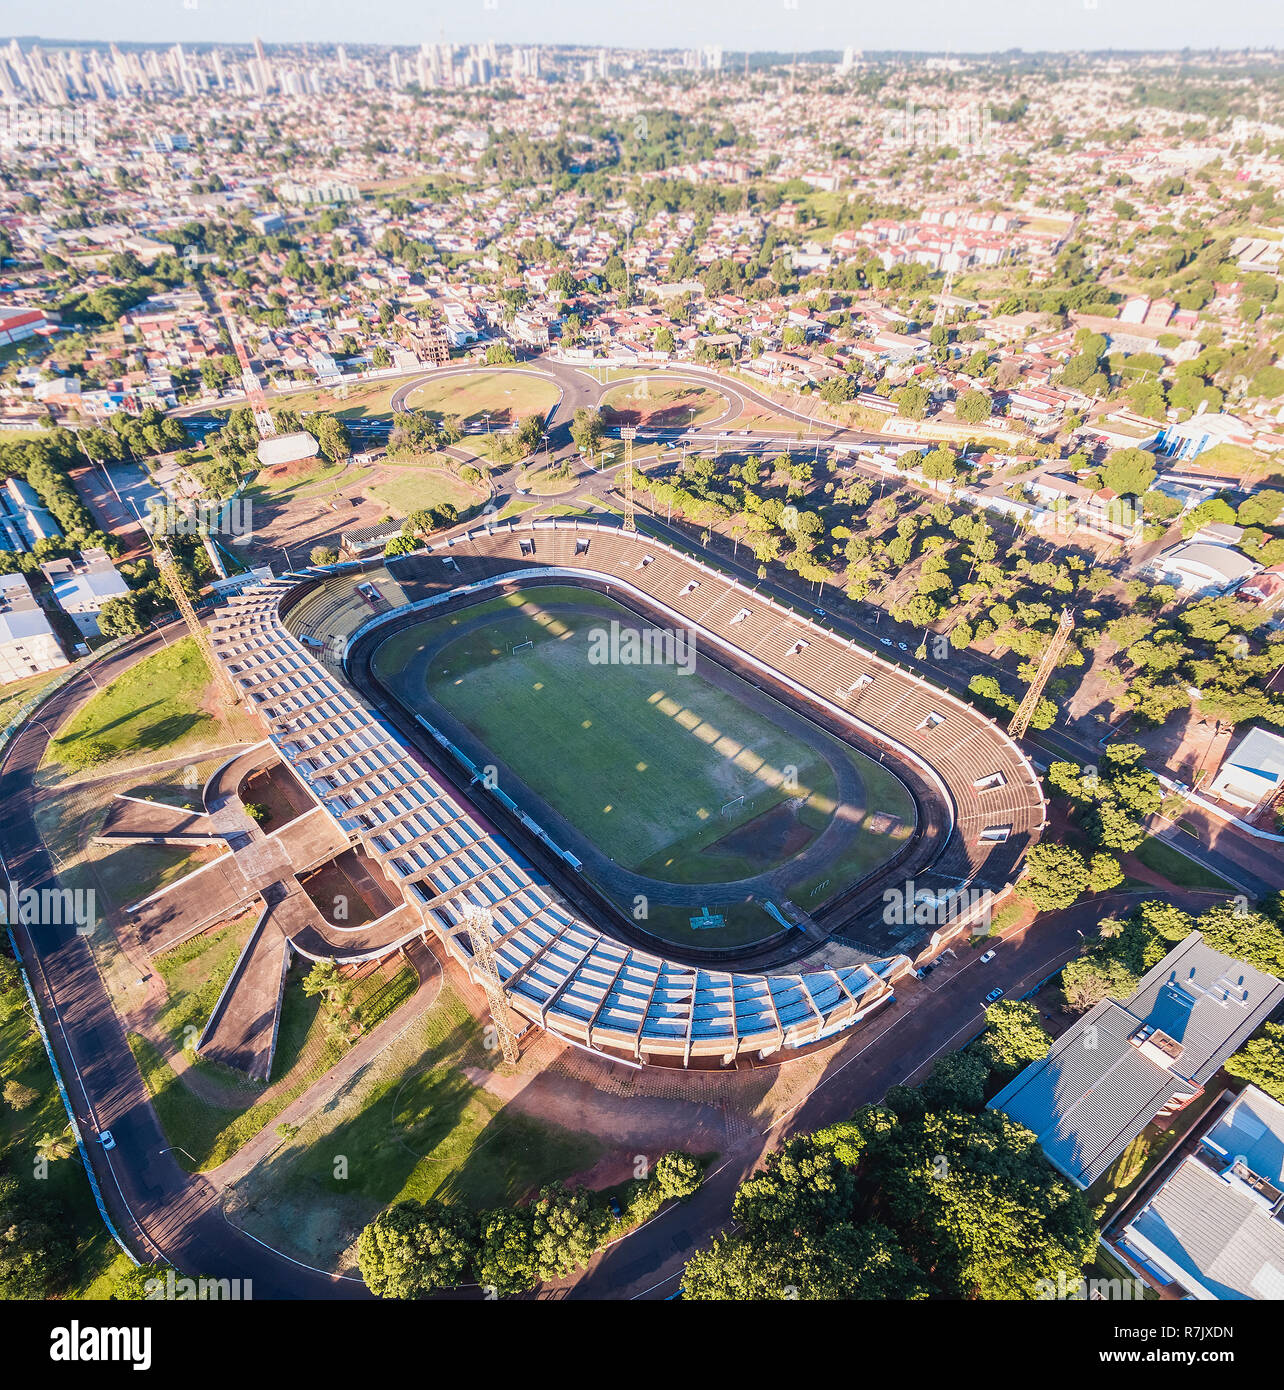 Campo Grande - MS, Brazil - December 08, 2018: Drone photo of the Estadio Pedro Pedrossian stadium. Aerial view of Estadio Morenao at a beautiful sunn Stock Photo